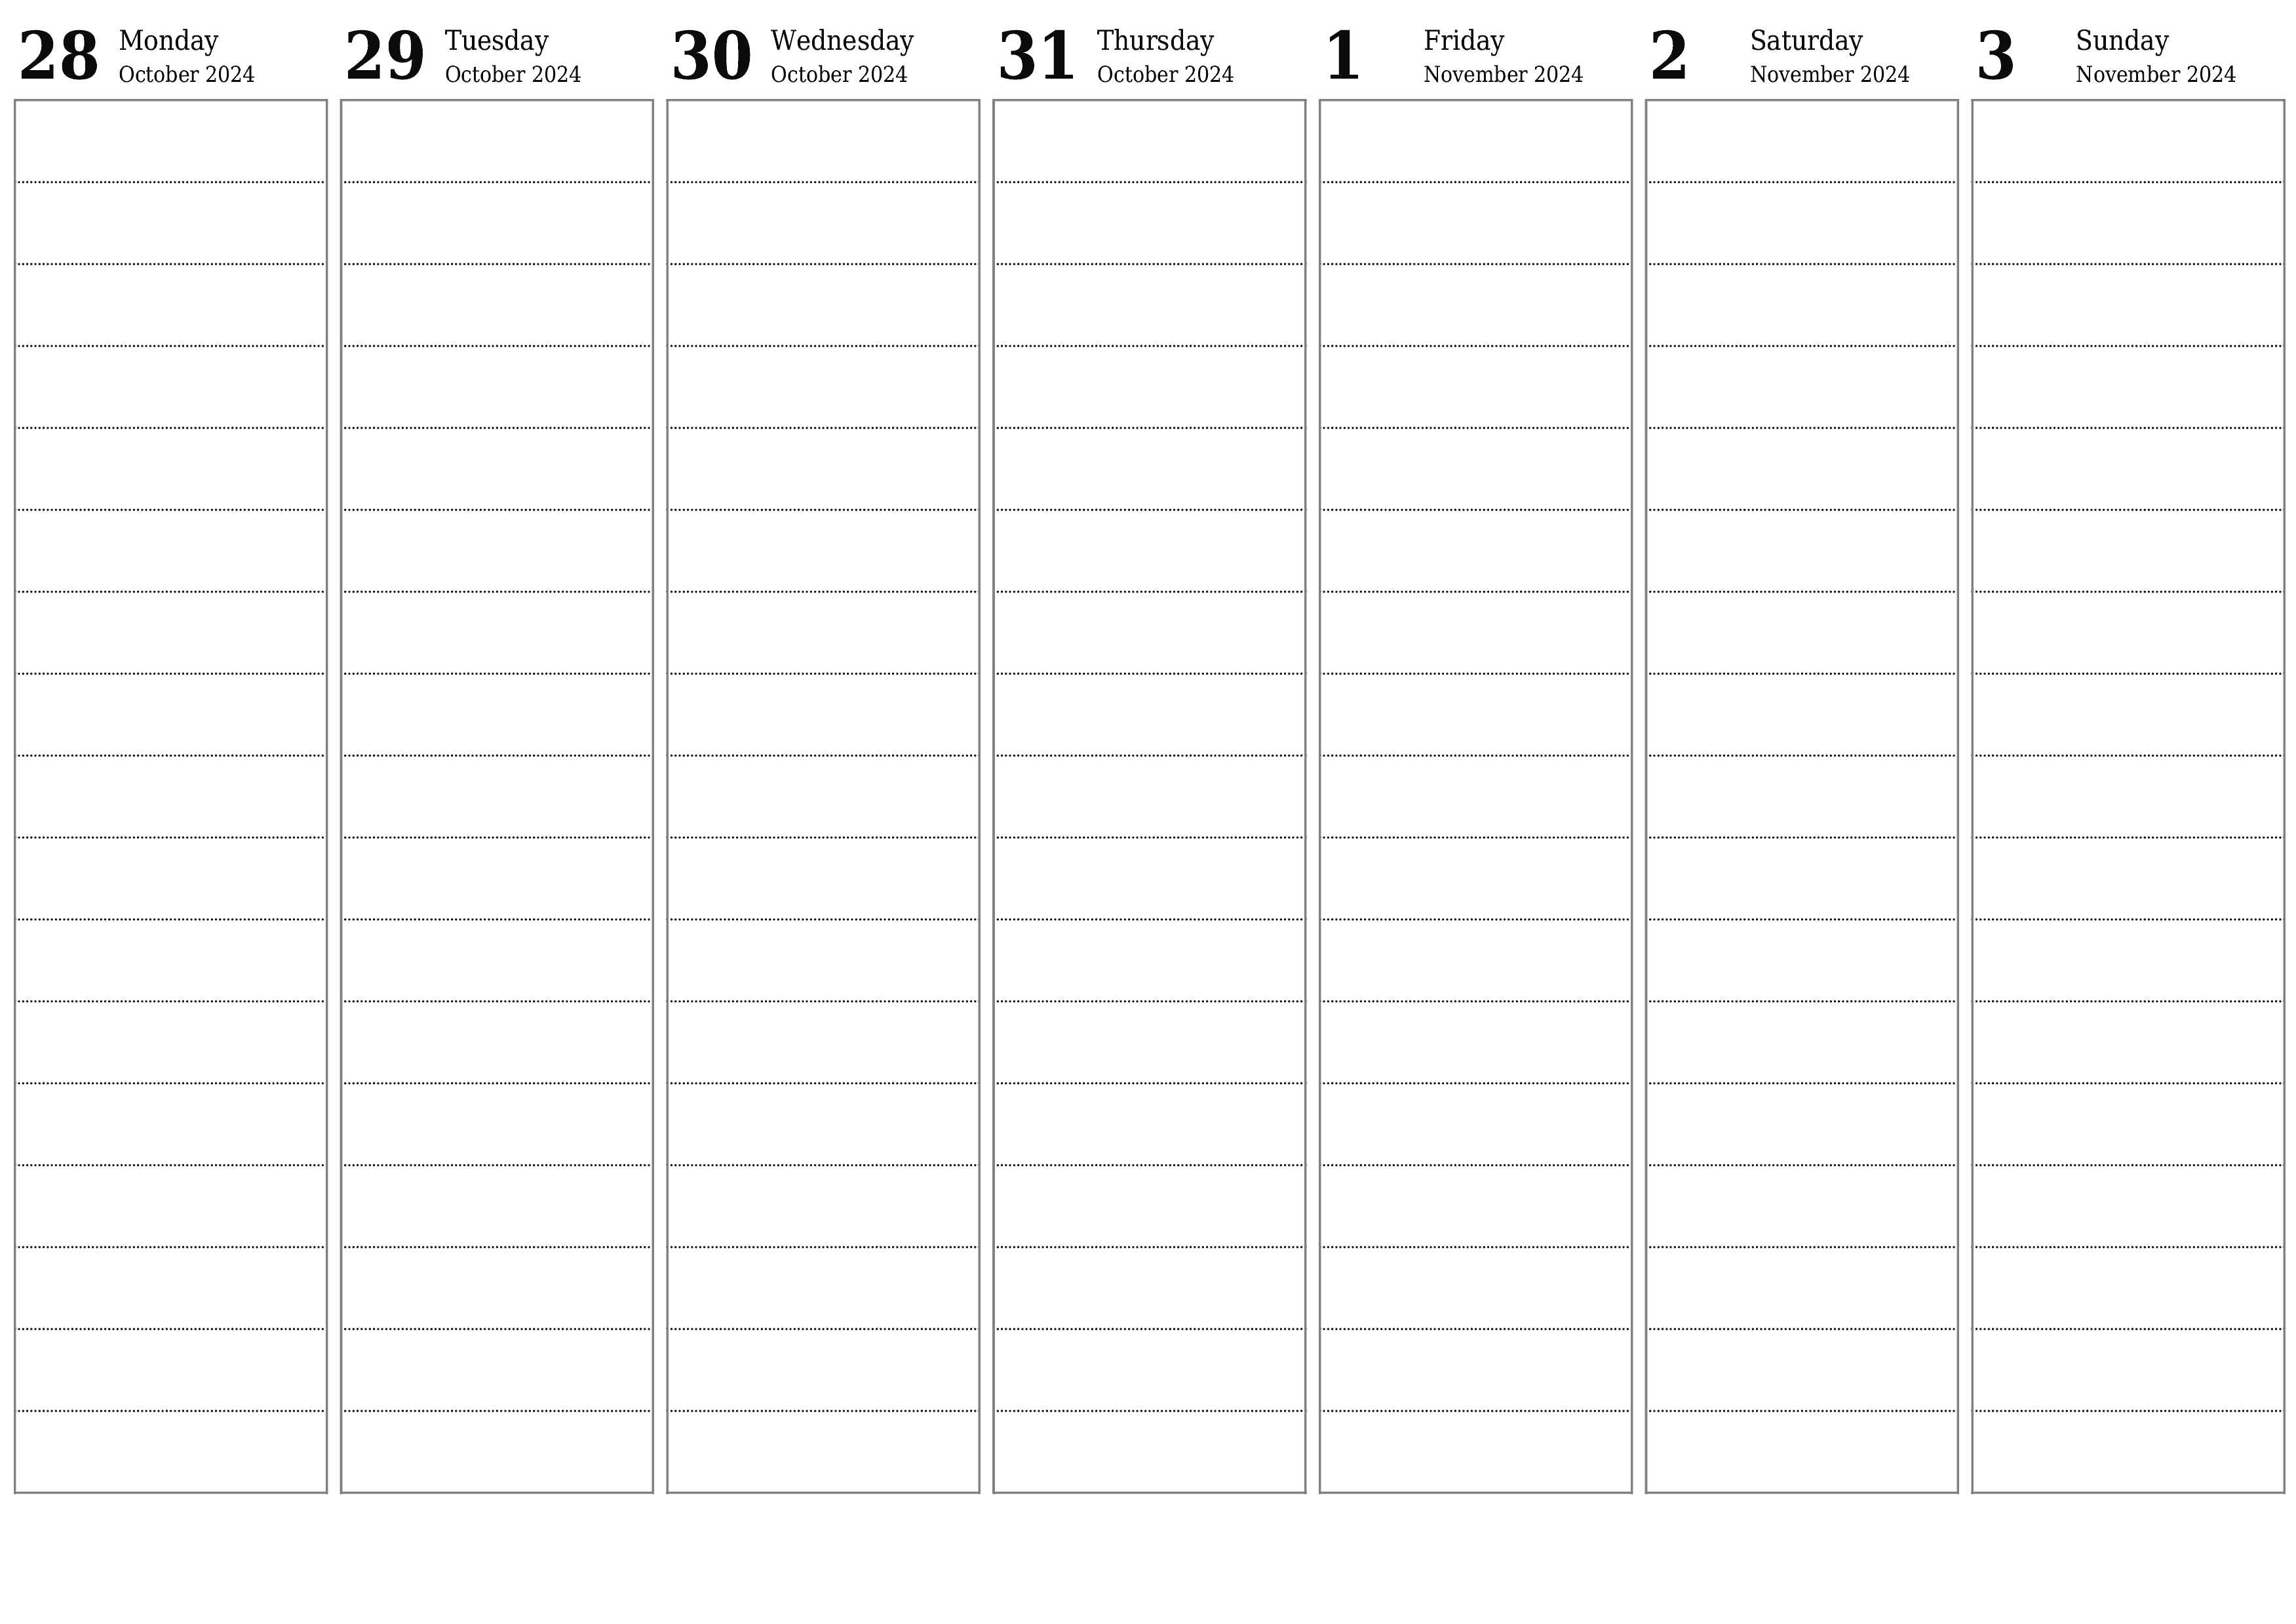 Blank calendar November 2024